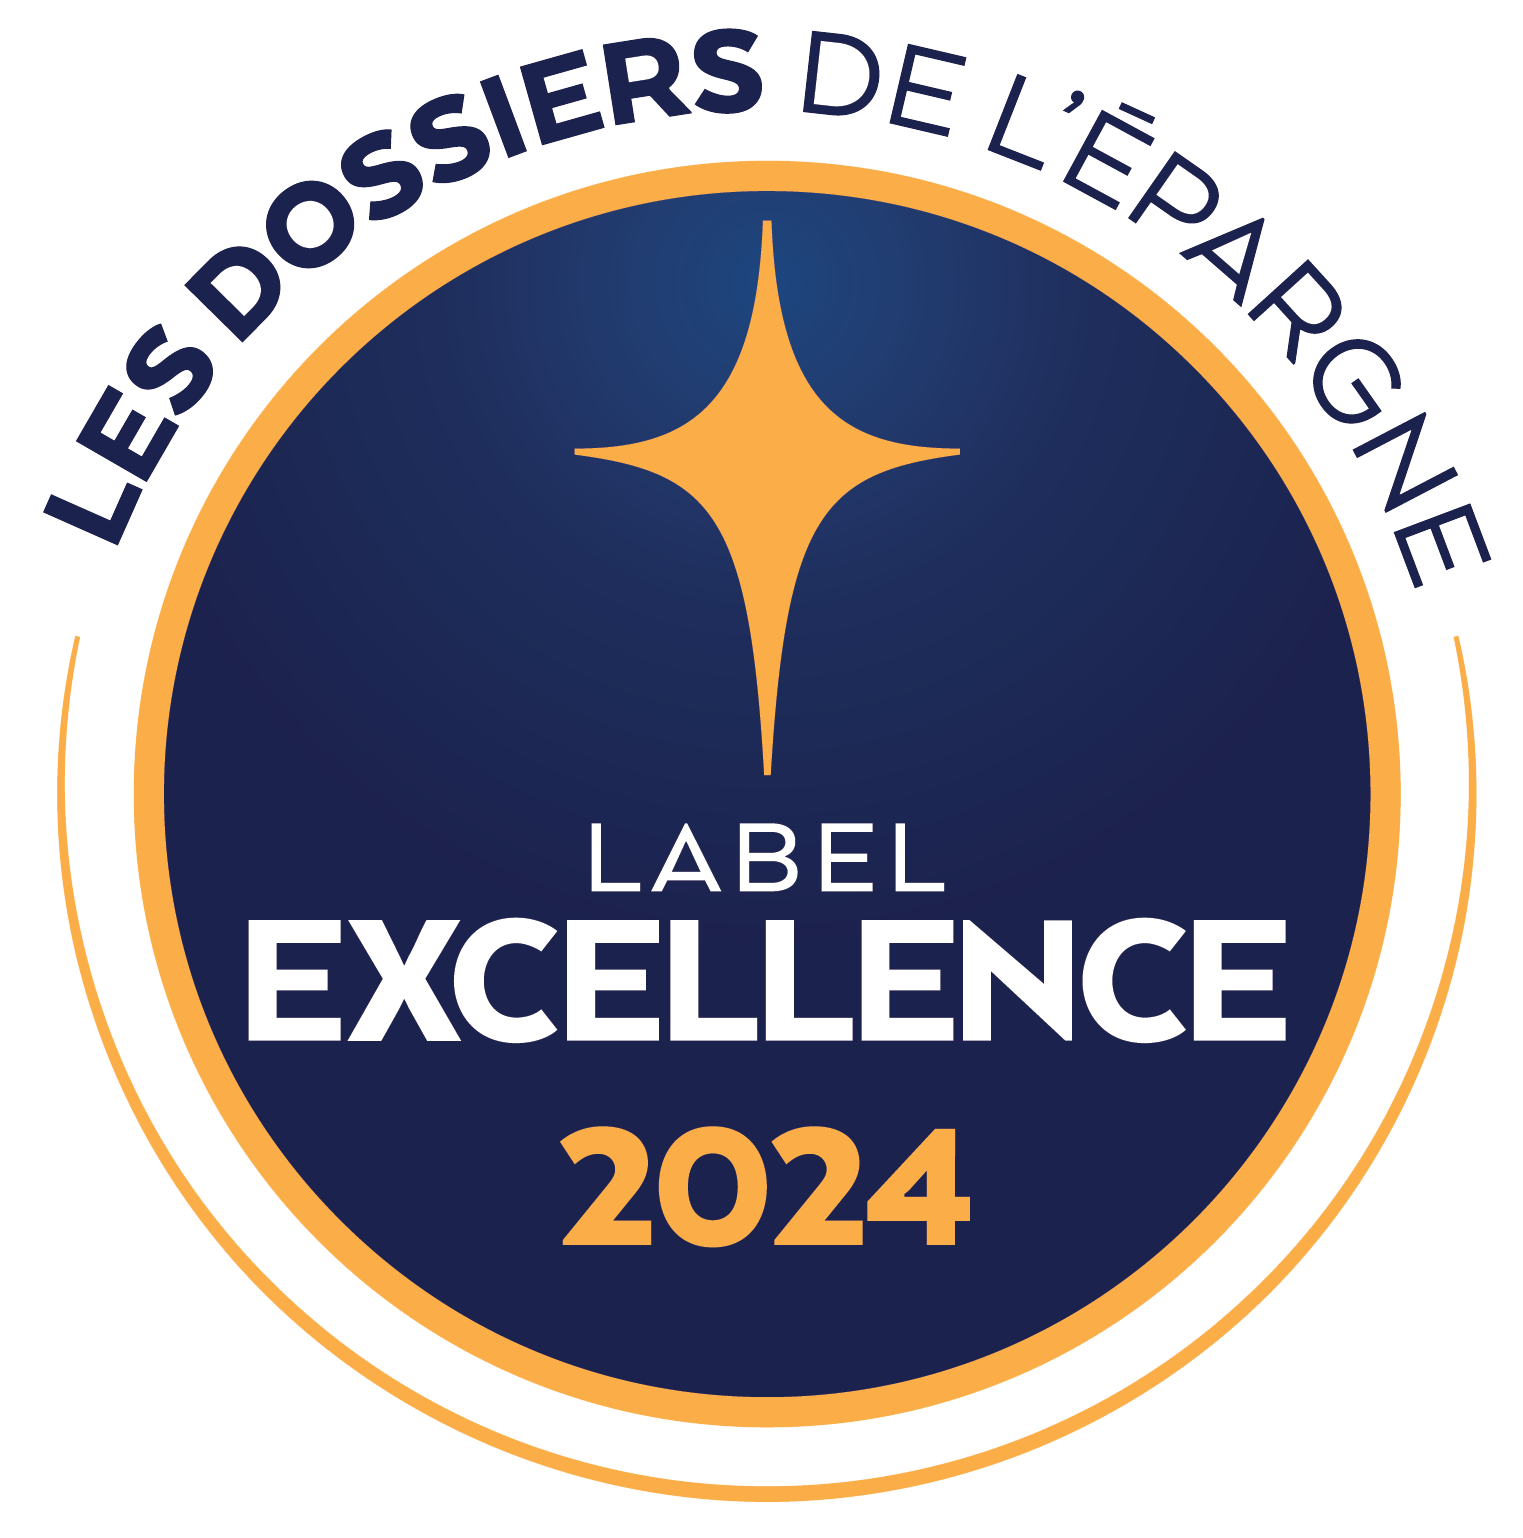 Label excellebce 2024